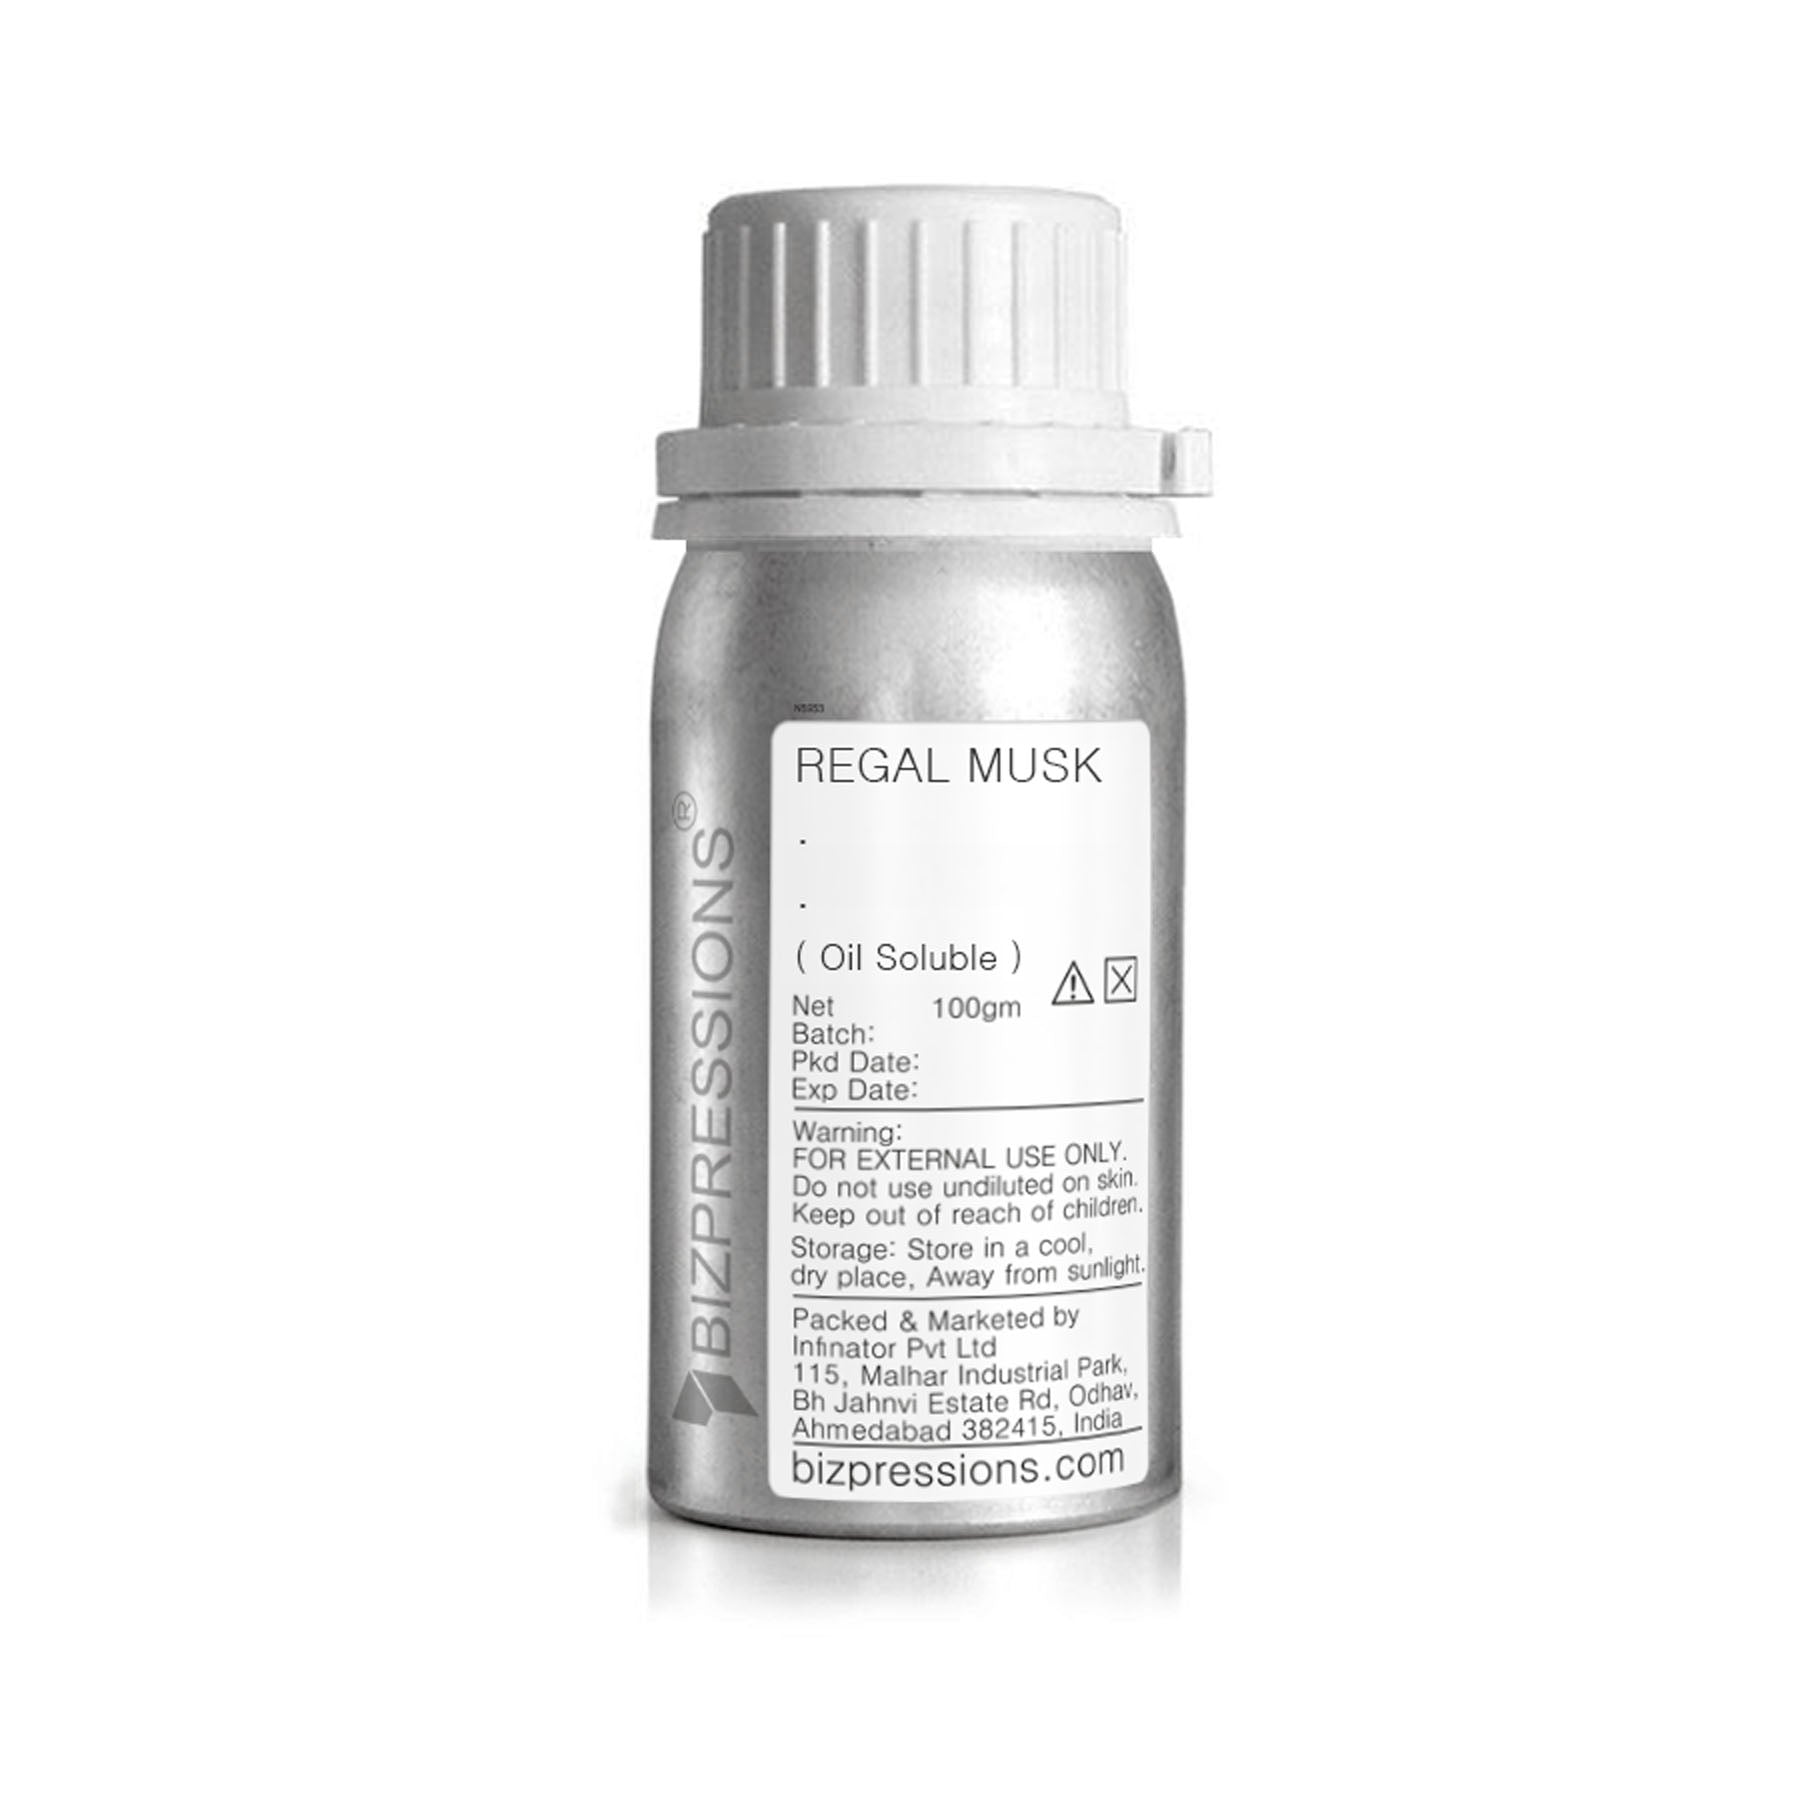 REGAL MUSK - Fragrance ( Oil Soluble ) - 100 gm